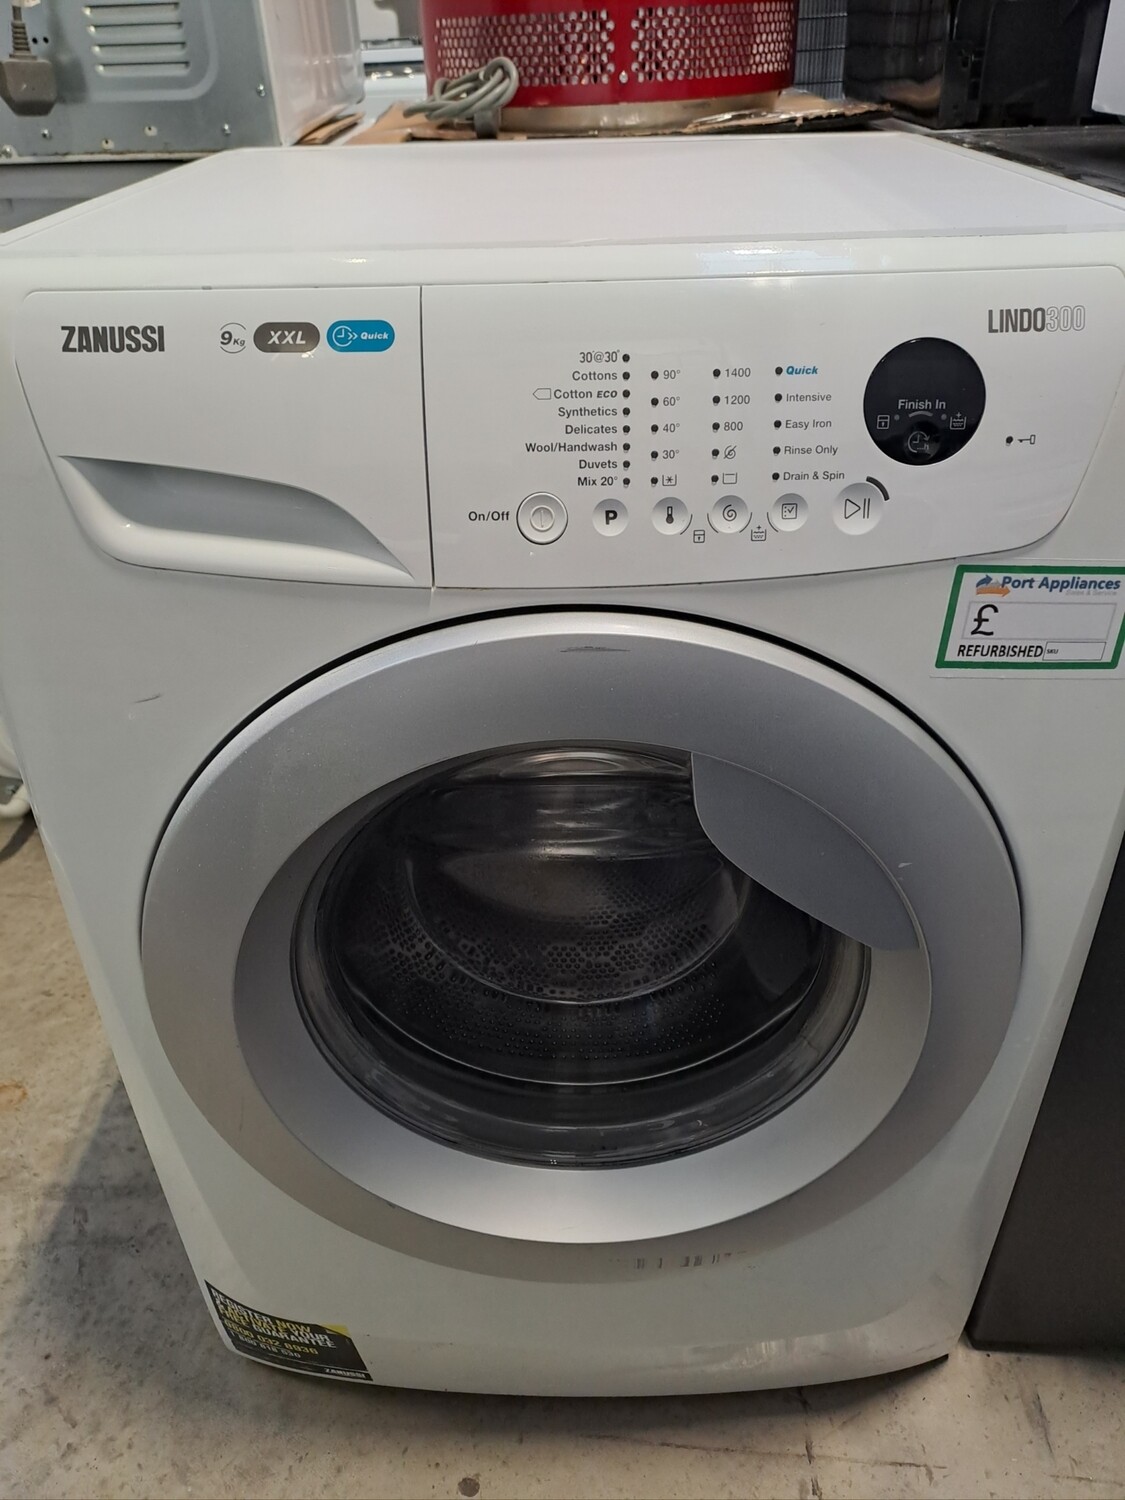 Zanussi ZWF91483WR Lindo300 XXL 9kg Load 1400 Spin Washing Machine - White - Refurbished - 6 Month Guarantee